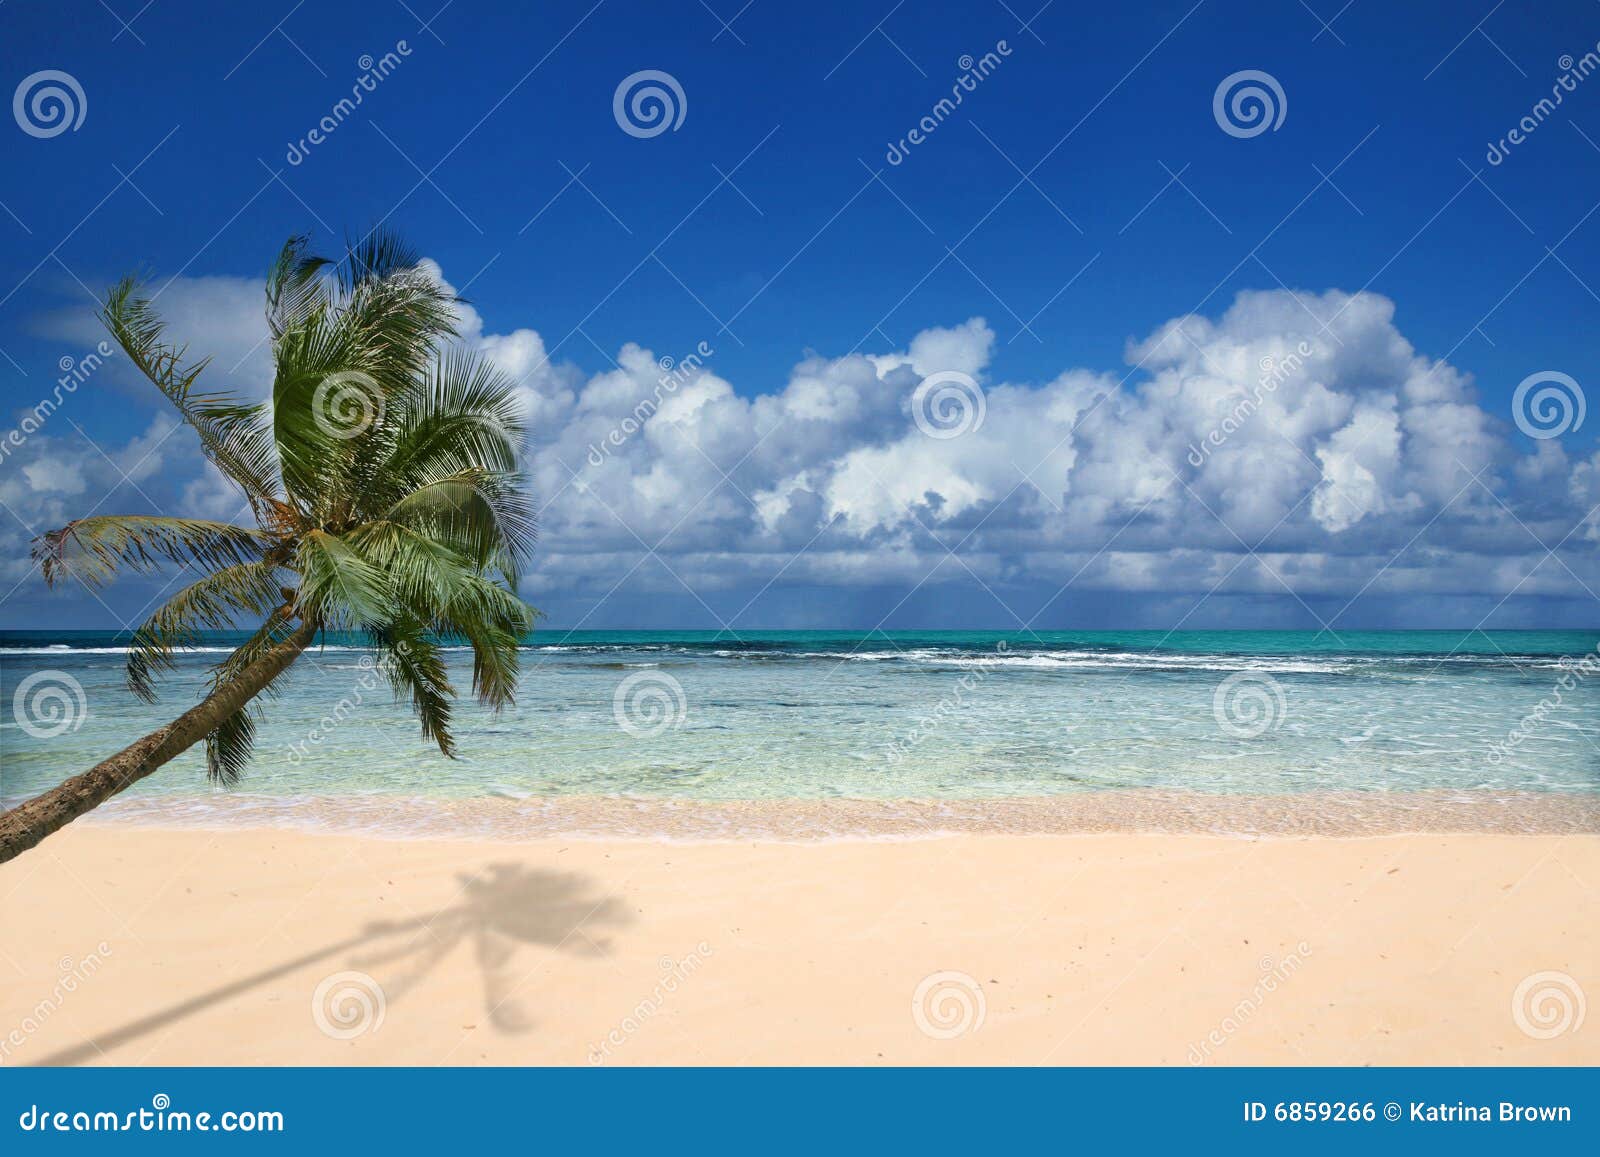 Perfect Beach in Hawaii stock photo. Image of palm, coast - 6859266